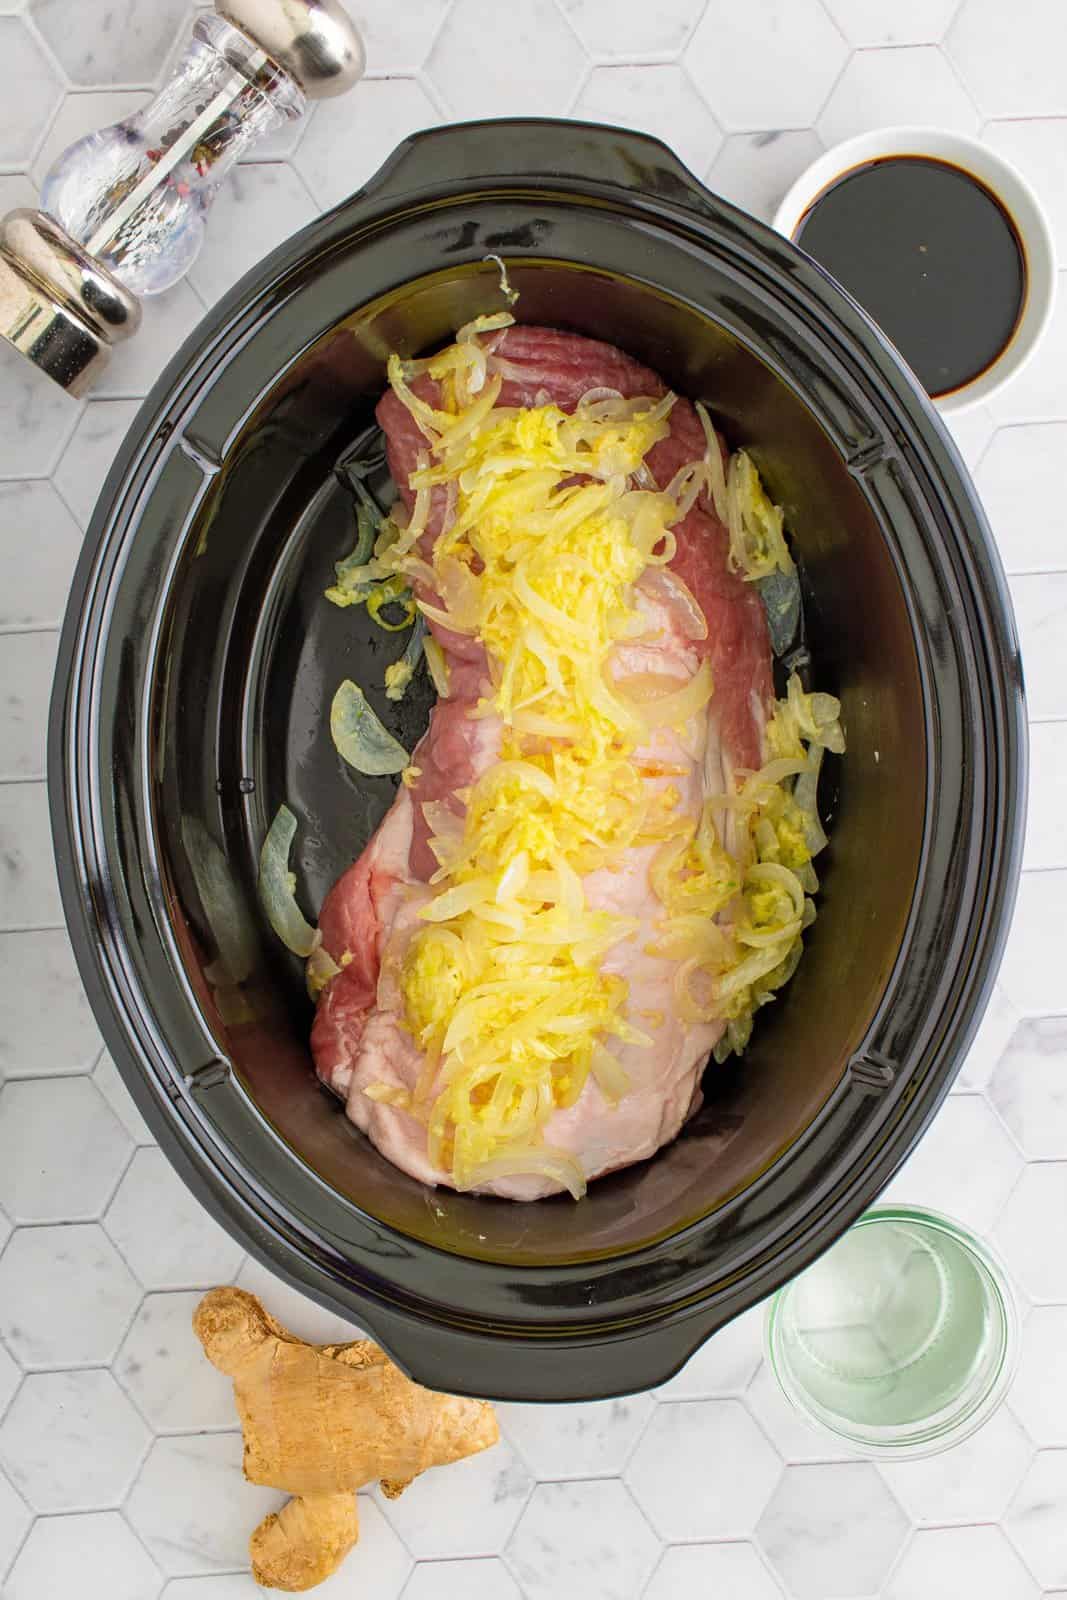 Pork loin in crock pot with sautéed onions on top.